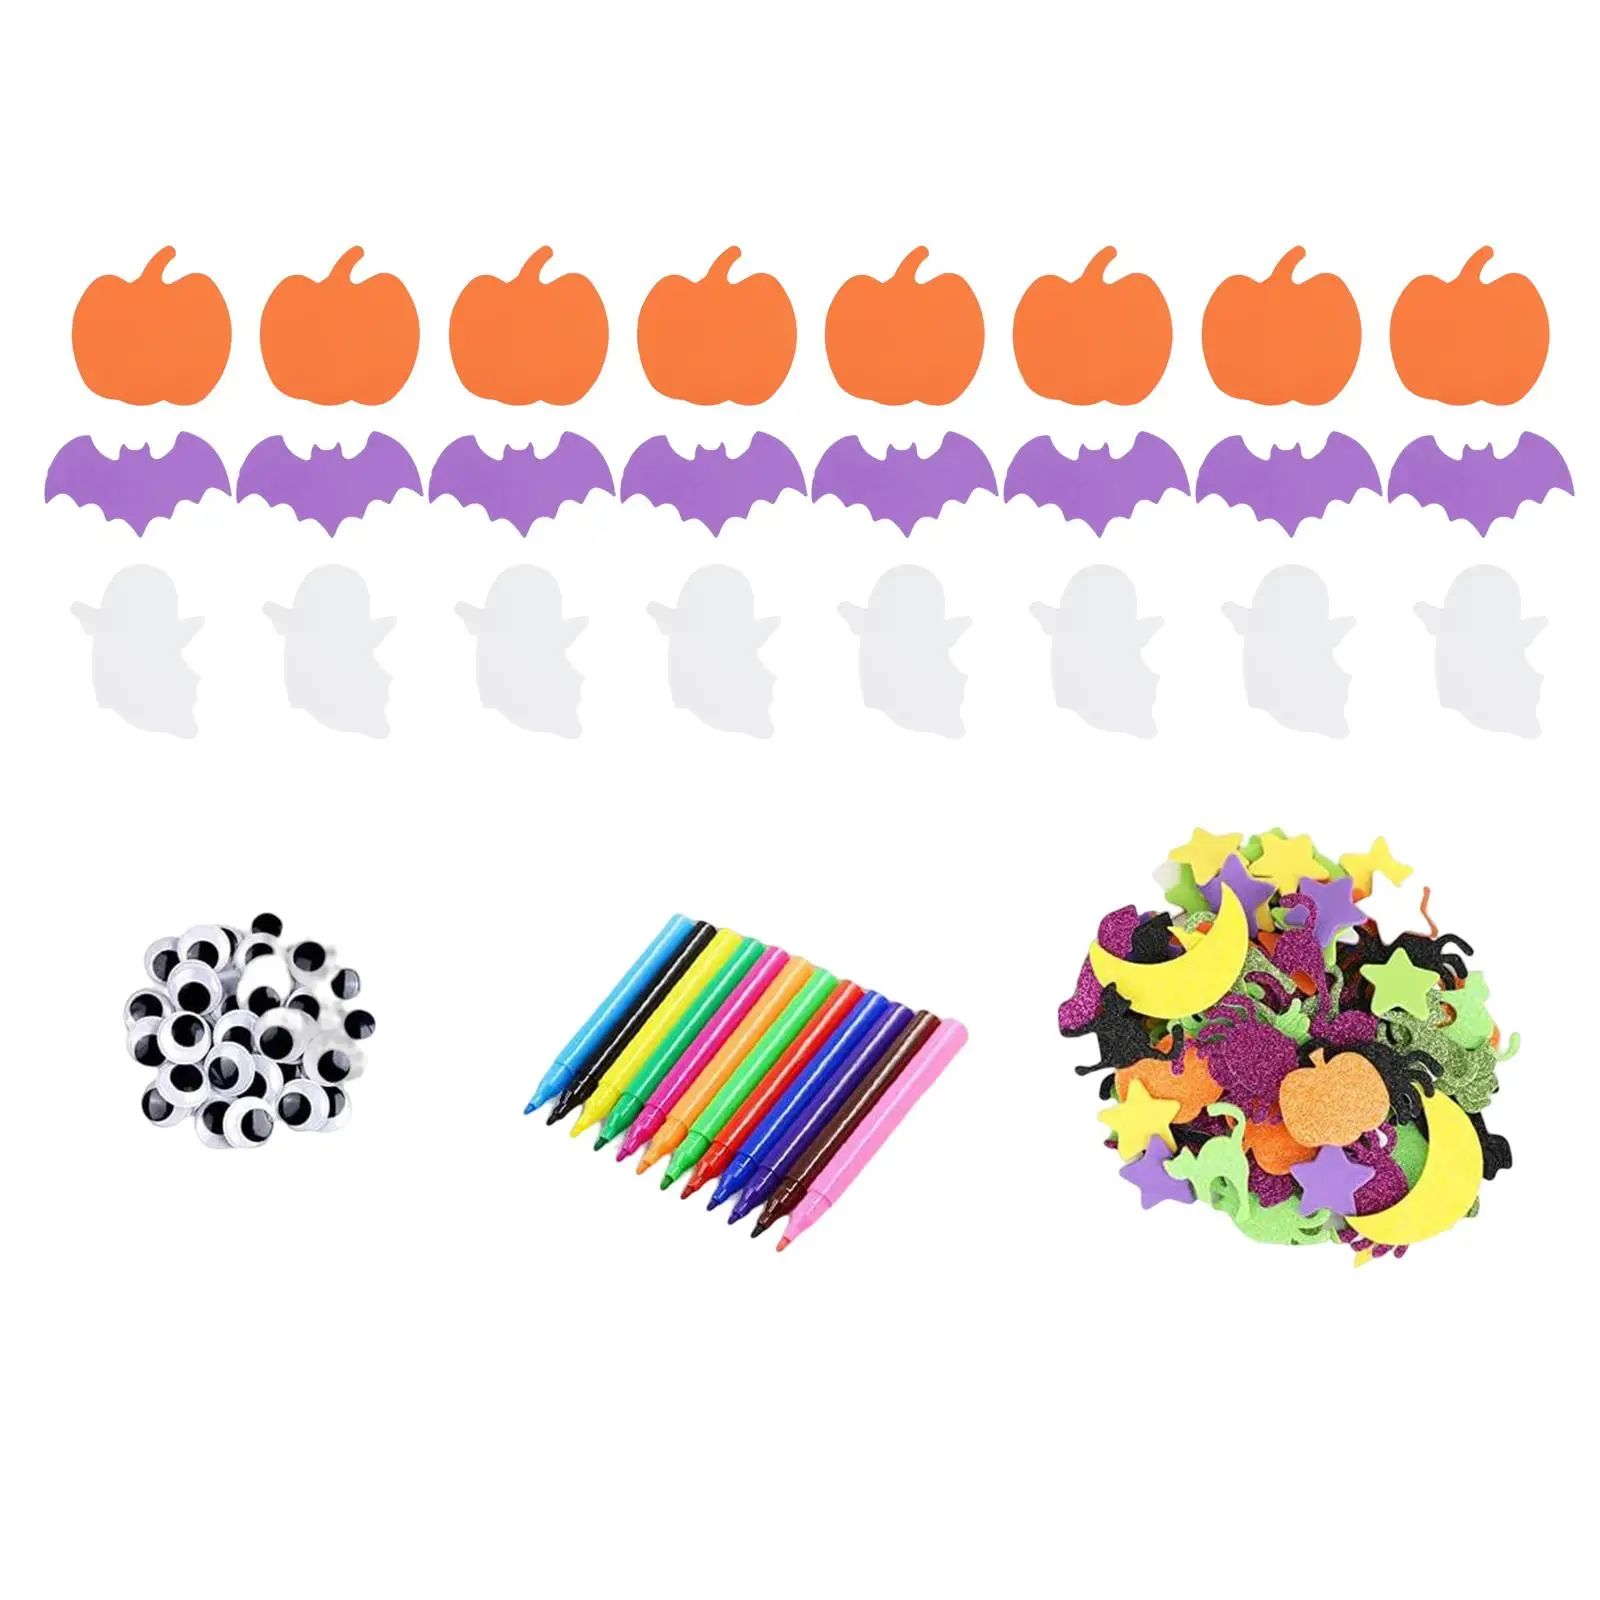 24 Pieces Halloween Foam Pumpkin Crafts Kit, Pumpkin Stickers for Halloween, Kids Crafts Party Decoration